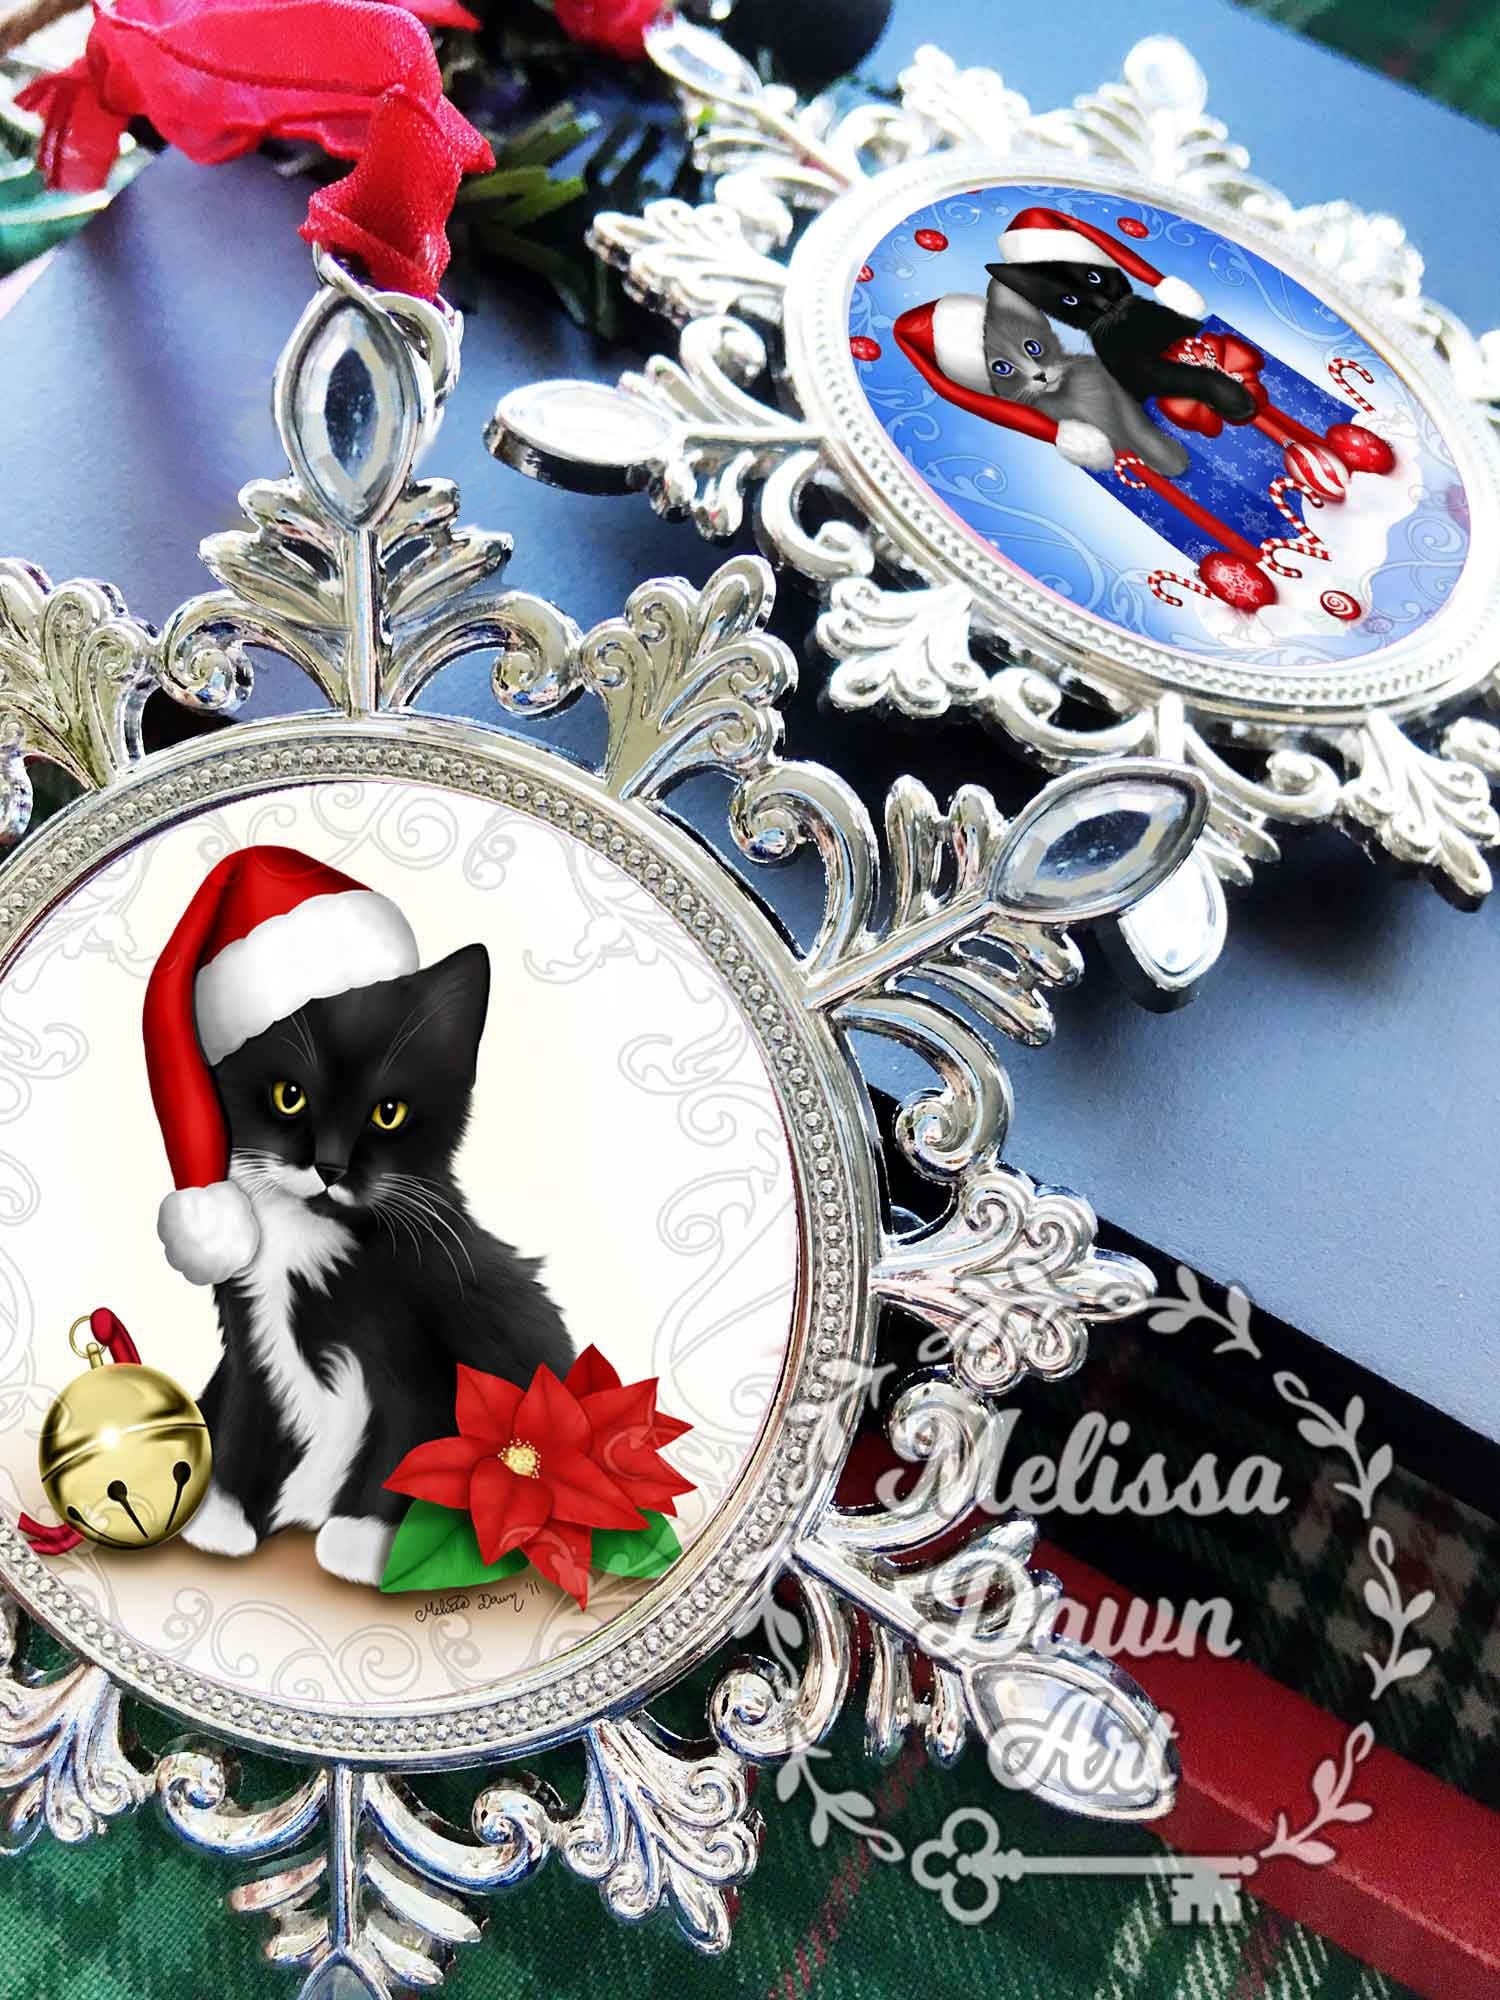 Christmas Ornament / Blue Ornament / Cat Christmas Ornament / Siamese Cat Ornament / Winter Moon Cat / Metal Ornament / Snowflake Ornament